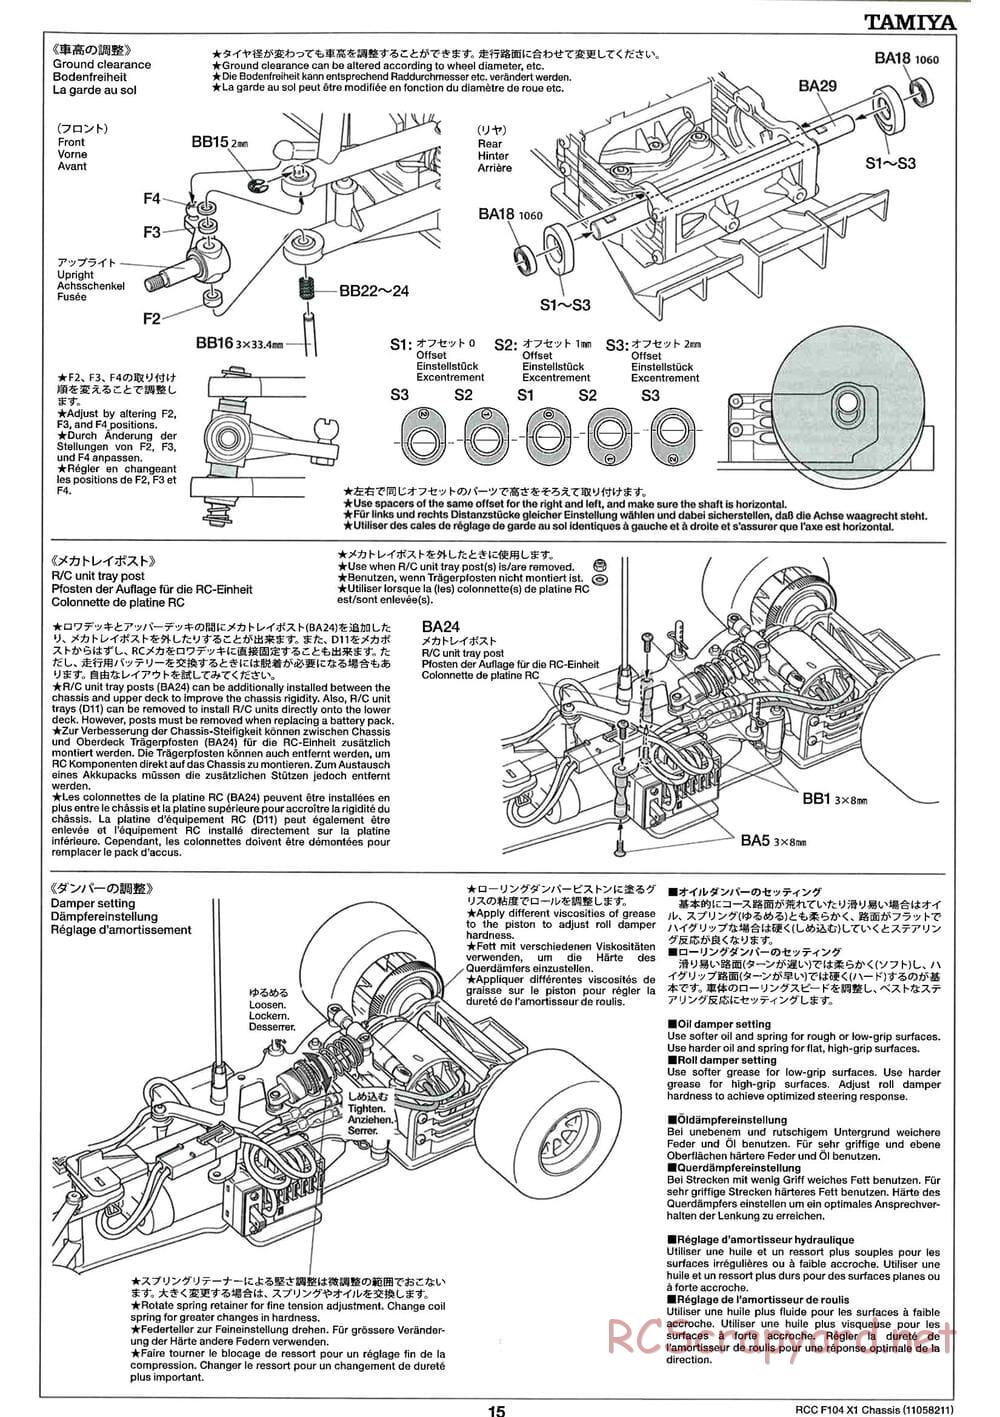 Tamiya - F104X1 Chassis - Manual - Page 15